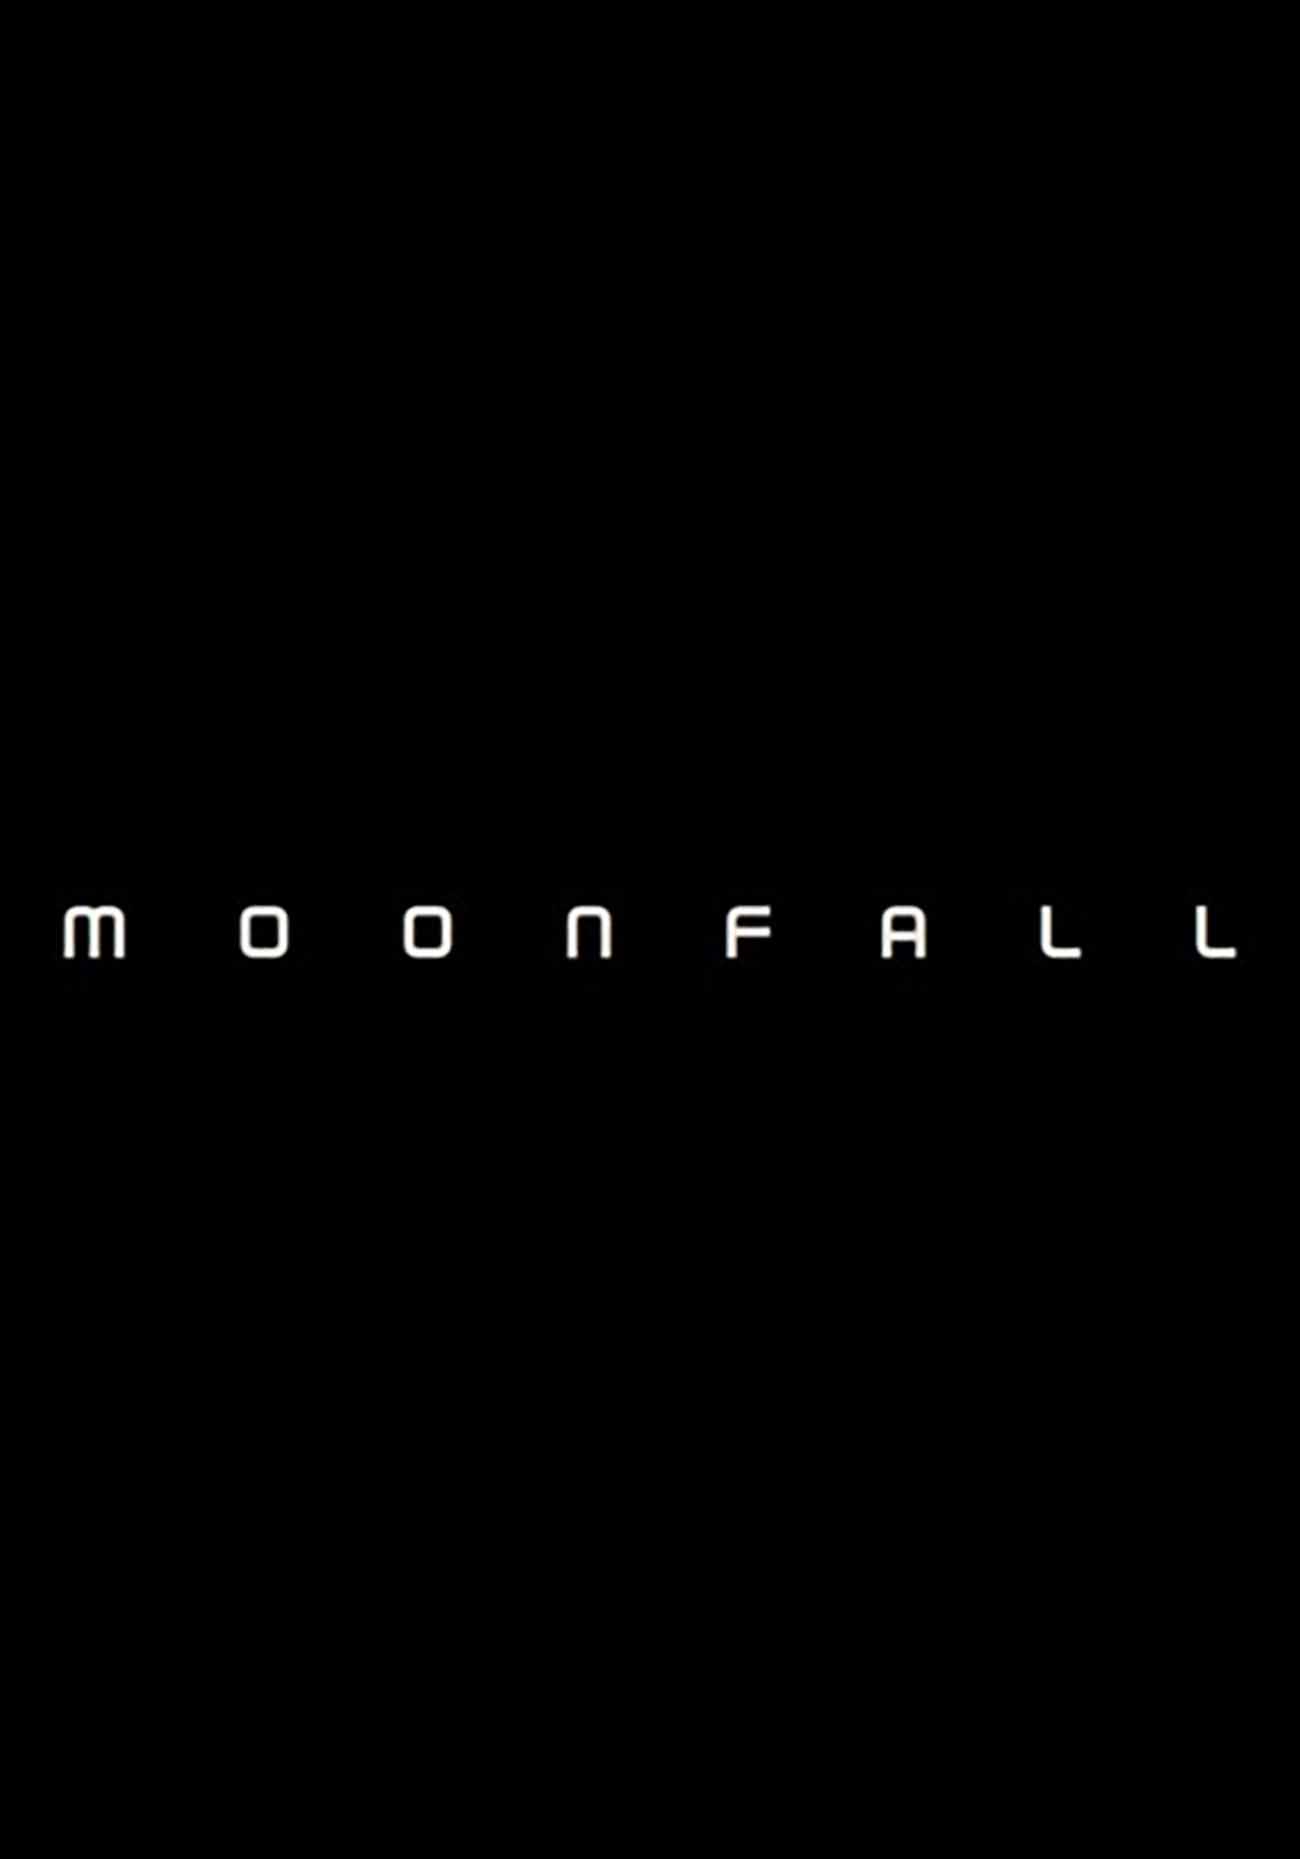 Primer tráiler de ‘Moonfall’ de Emmerich